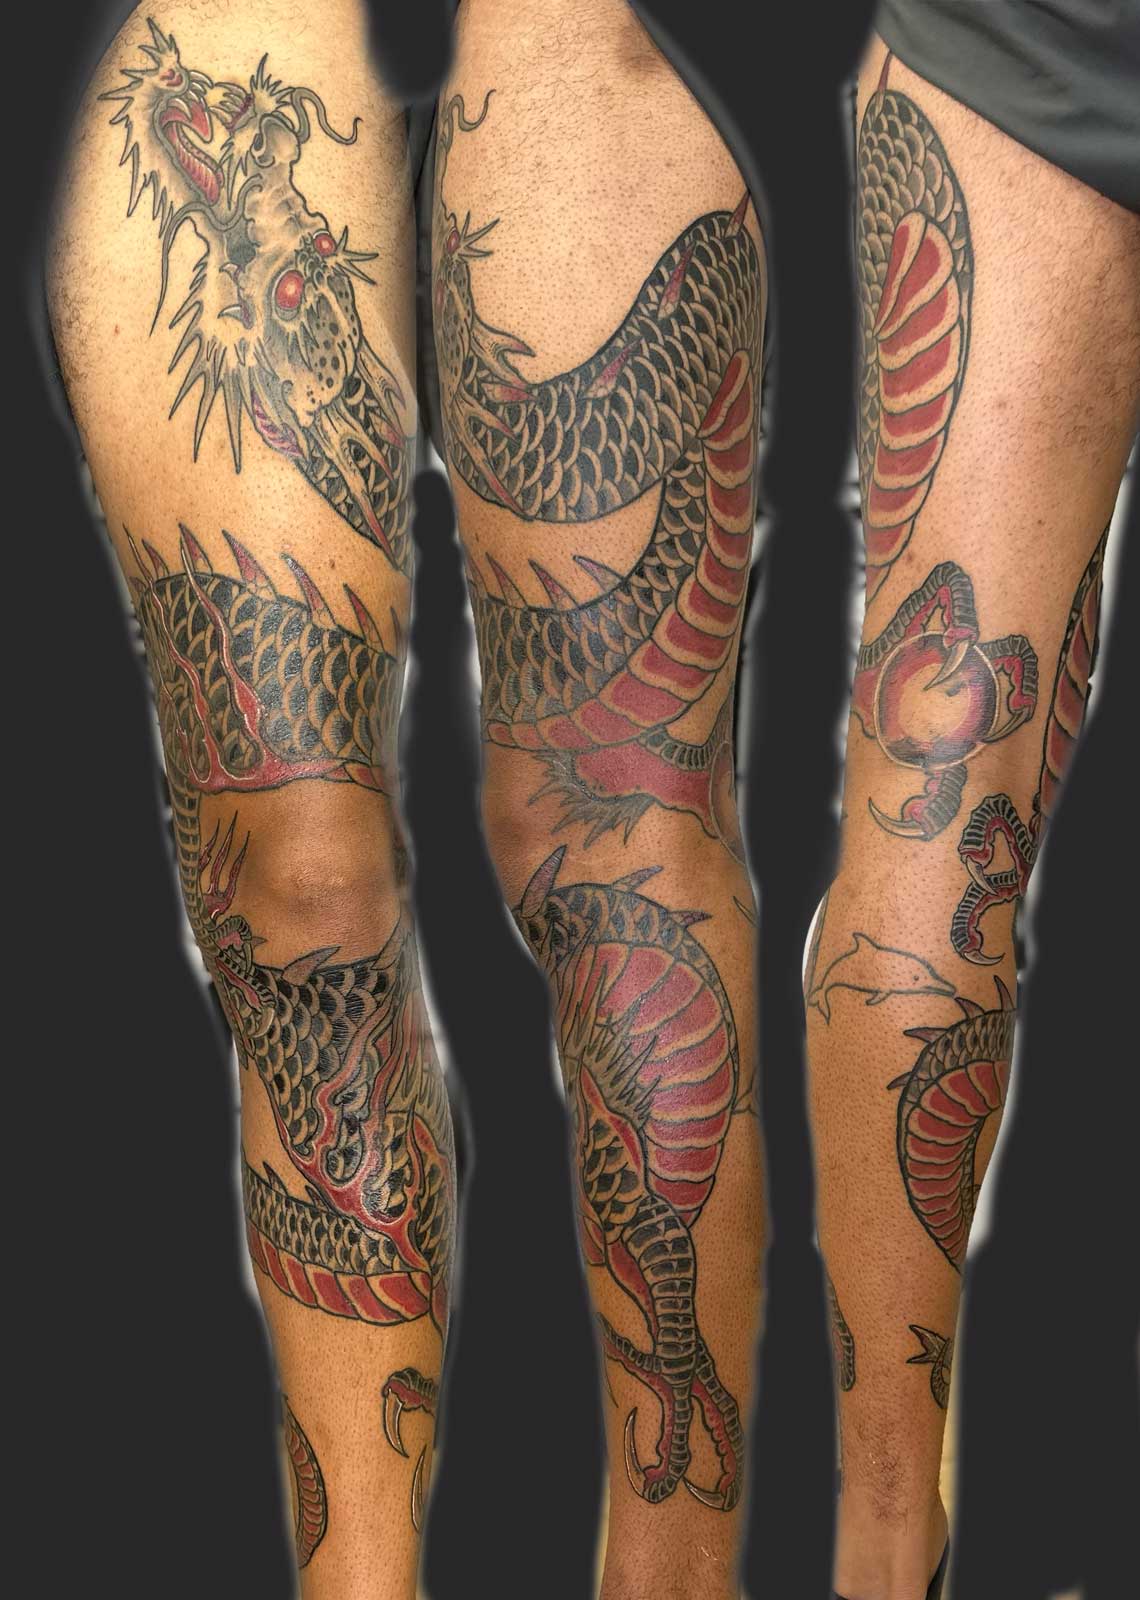 Unify Tattoo Company : Tattoos : Feminine : In progress Japanese dragon